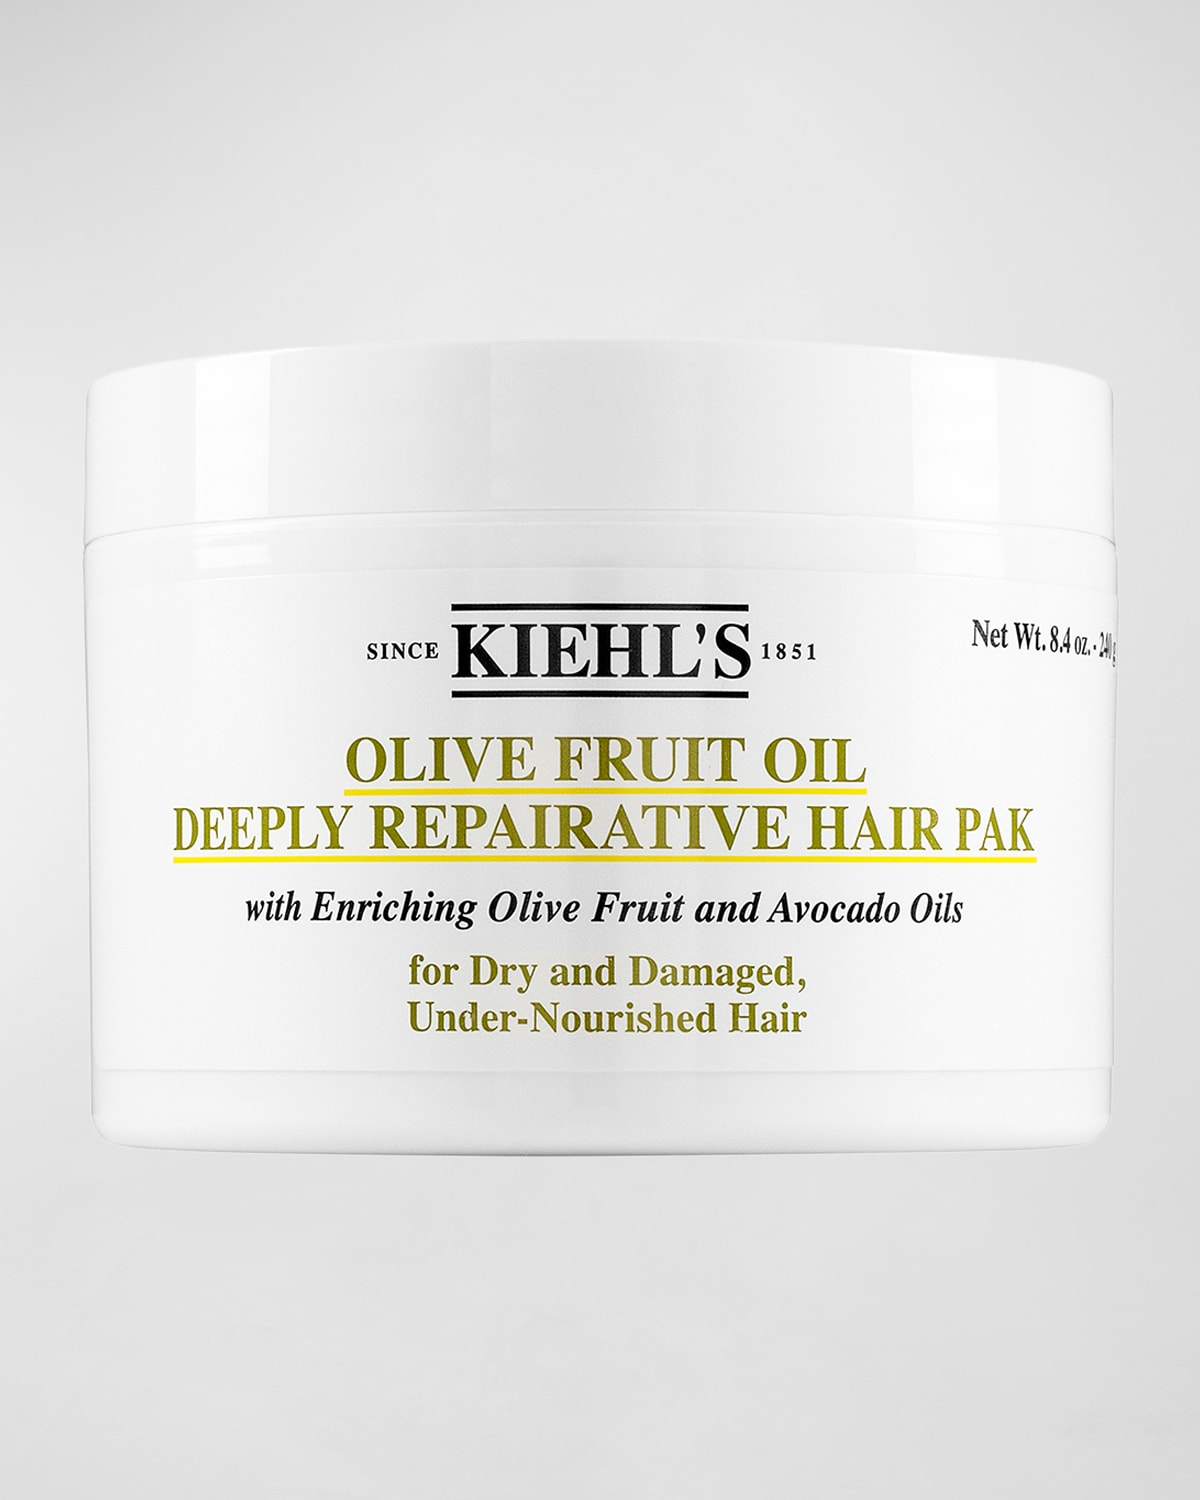 8 oz. Olive Fruit Oil Deeply Repairative Hair Pak